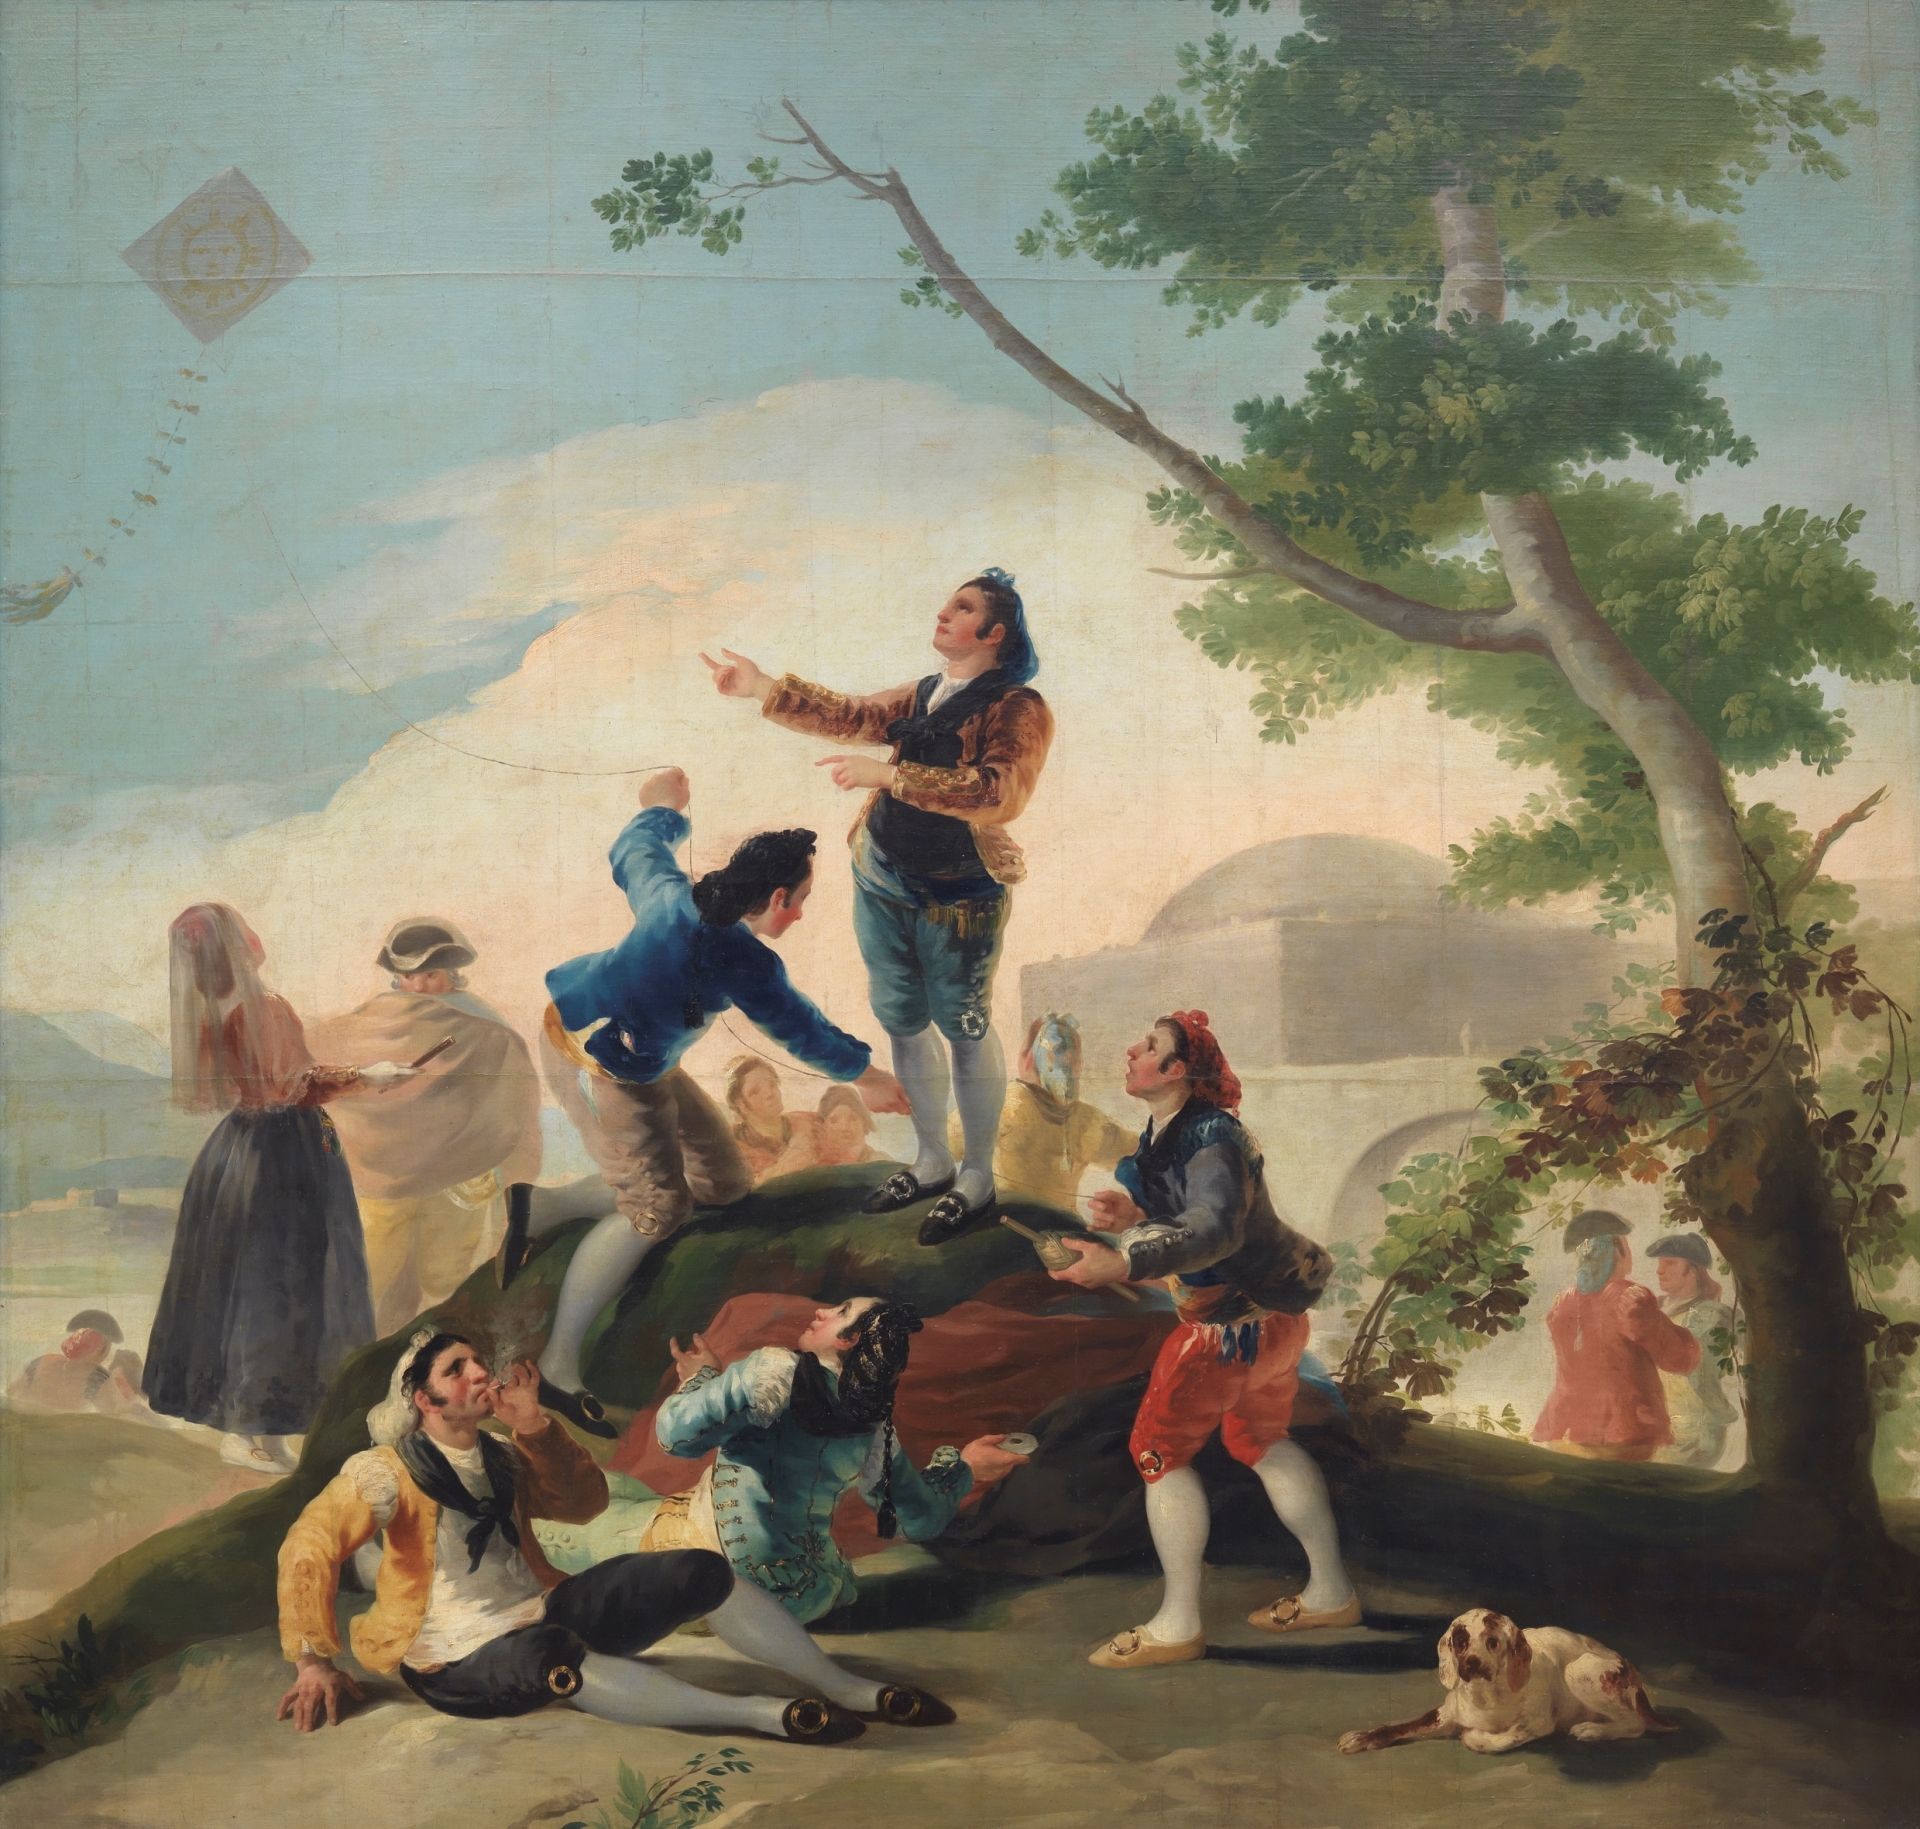 The Kite (1778).